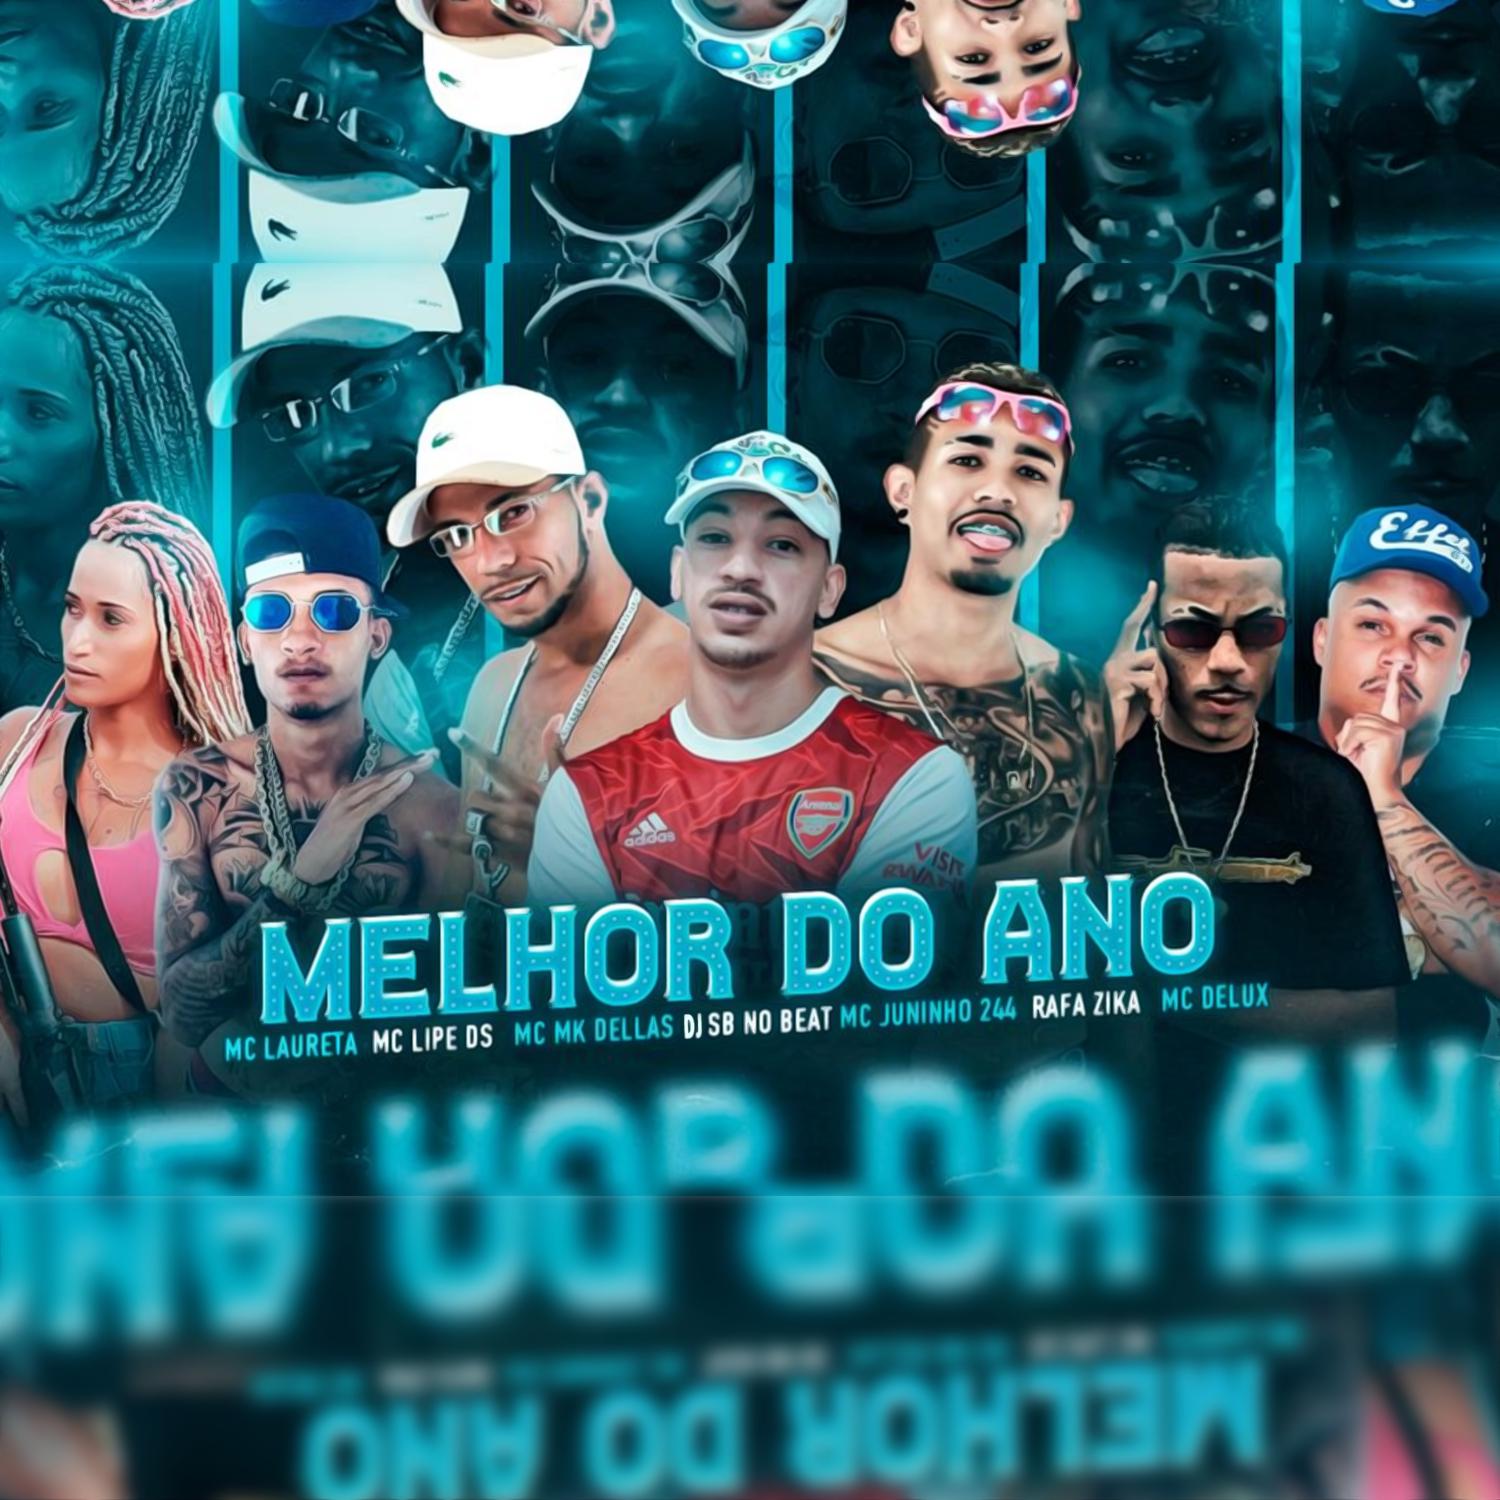 DJ SB no Beat - Melhor do Ano (feat. Mc Laureta, Mc Delux, Rafa Zika & MC Juninho 244)